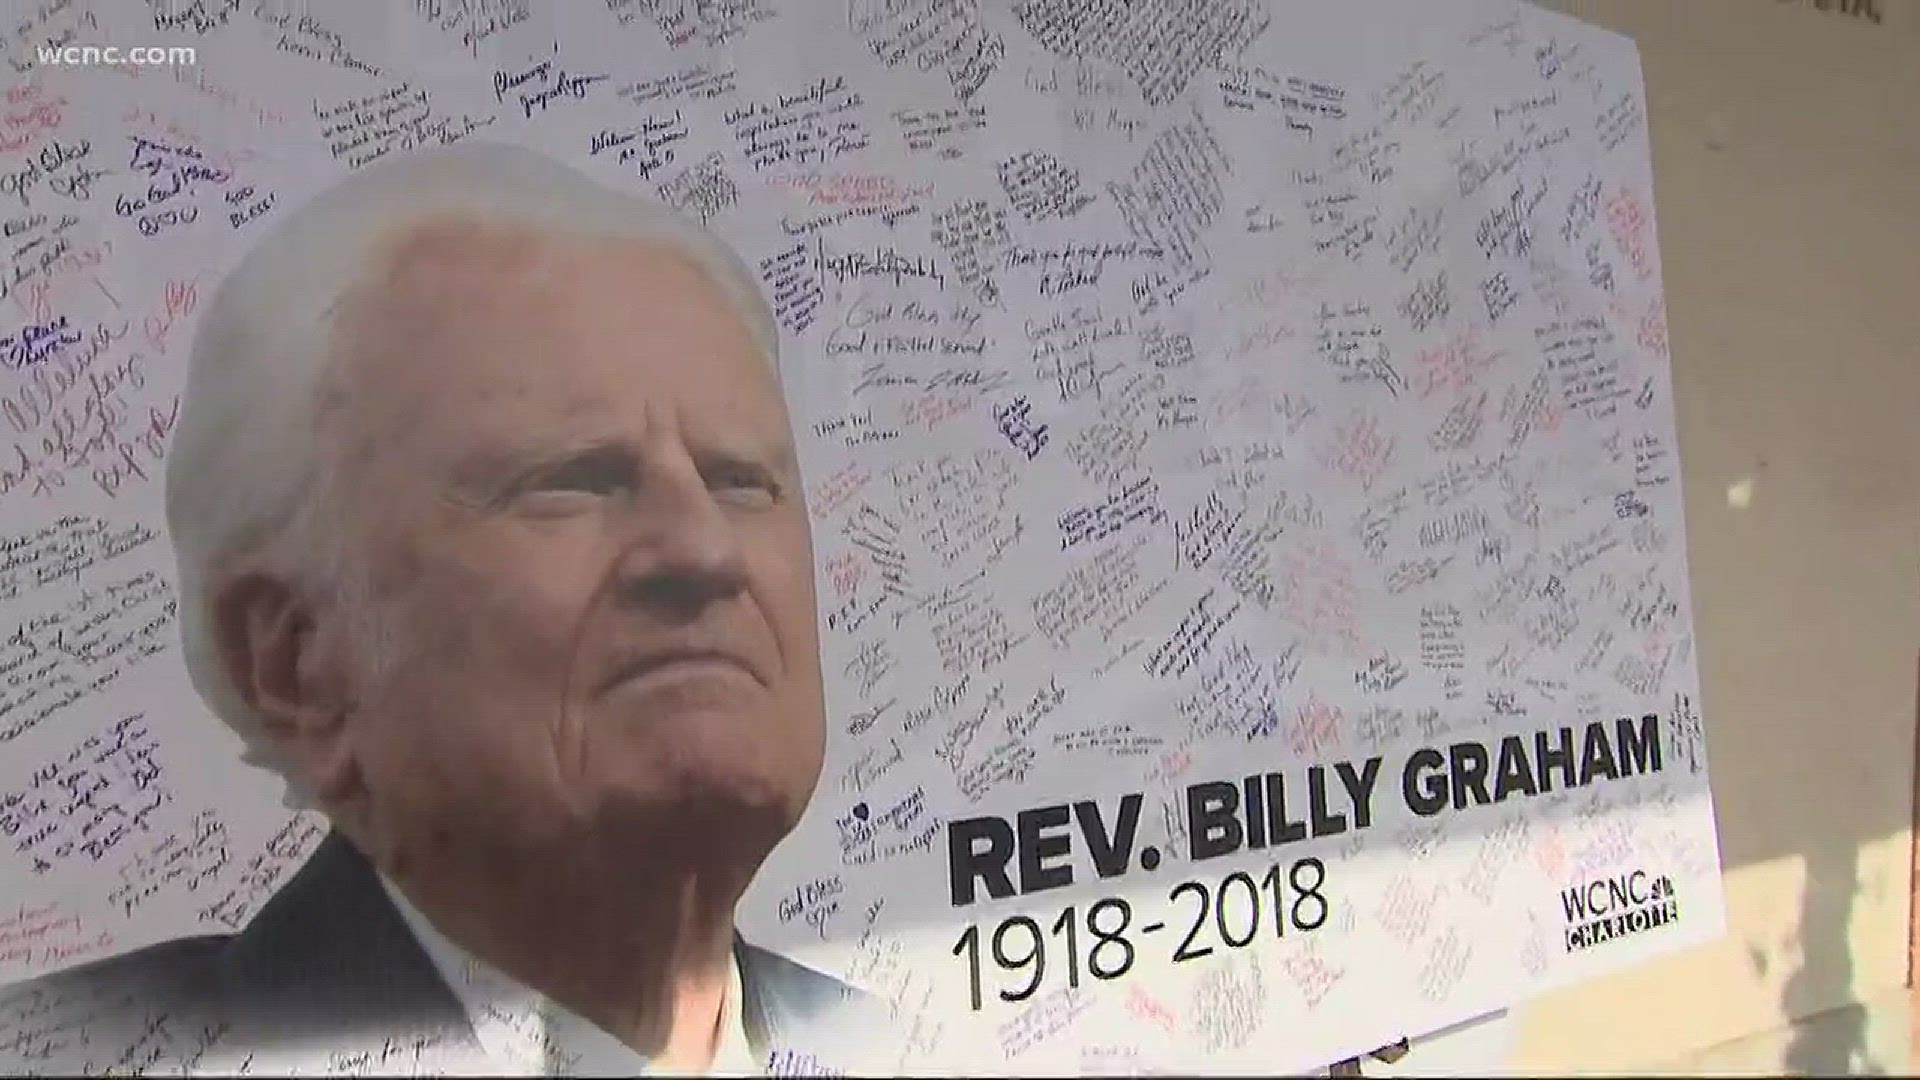 Viewers share condolences for Rev. Billy Graham